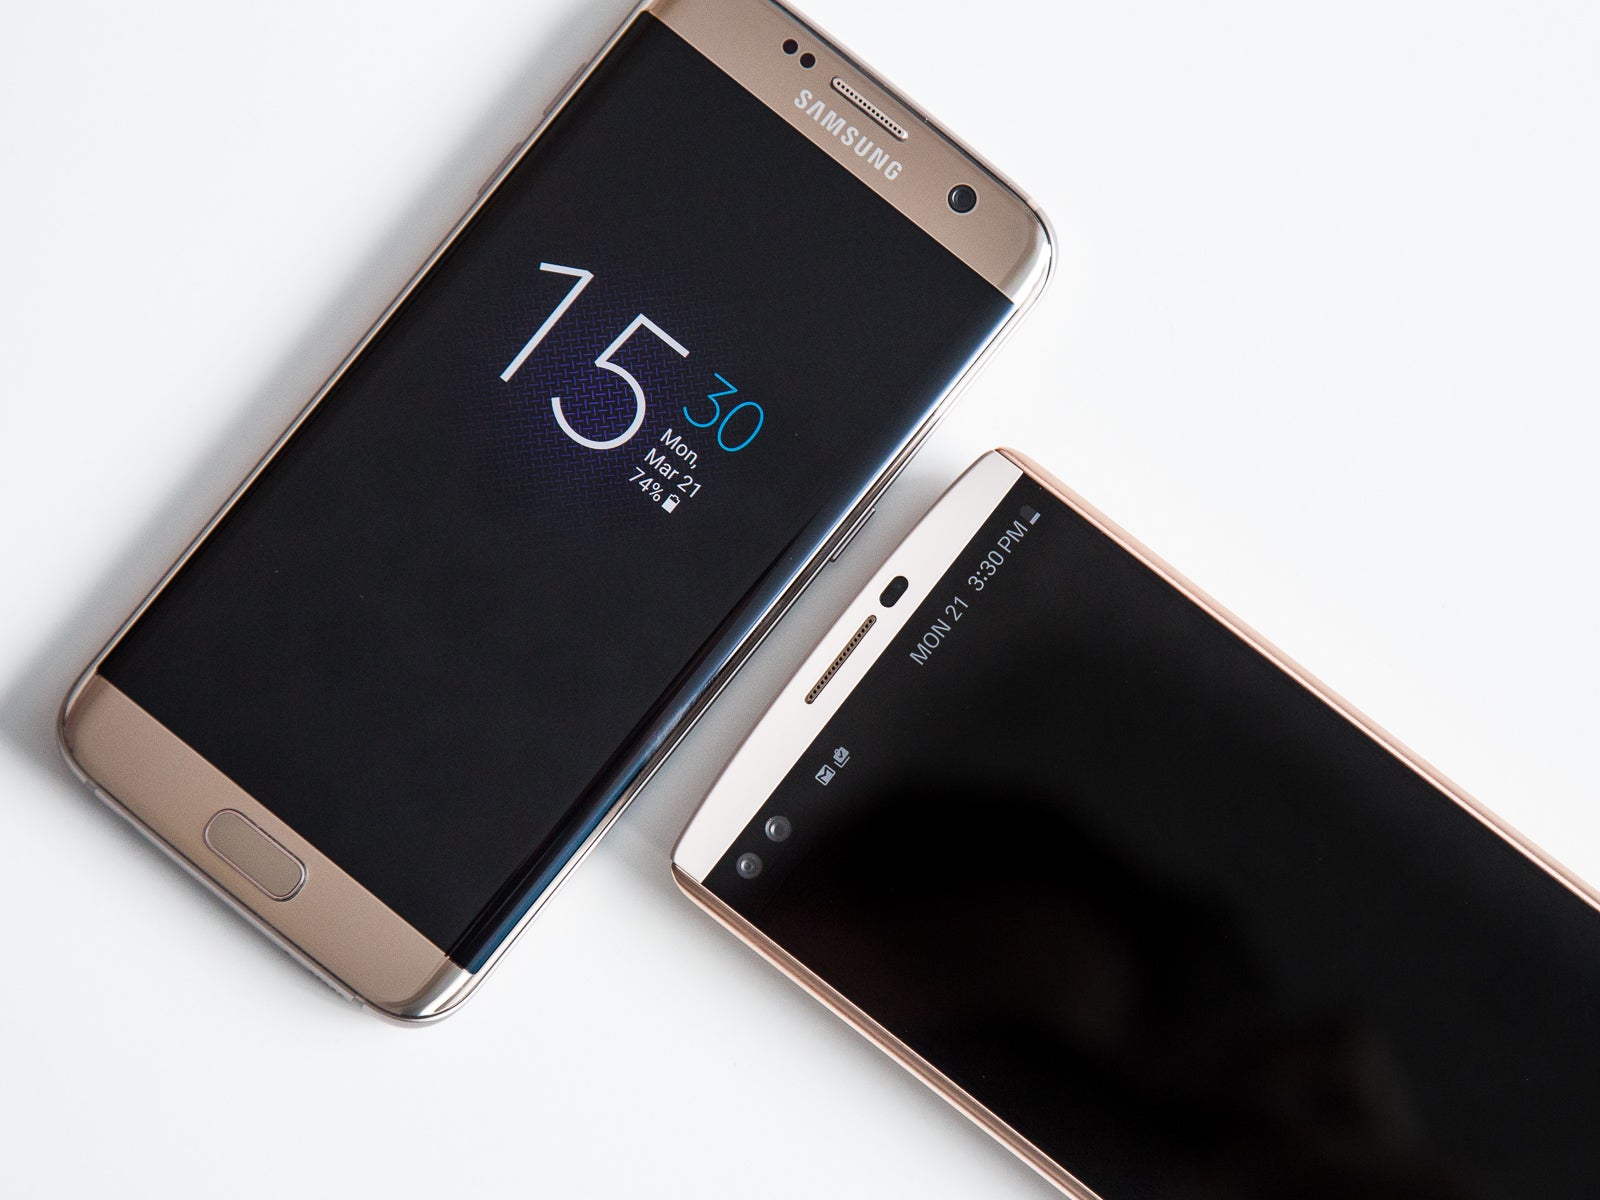 Always-on displays - Samsung Galaxy S7 Edge vs LG V10